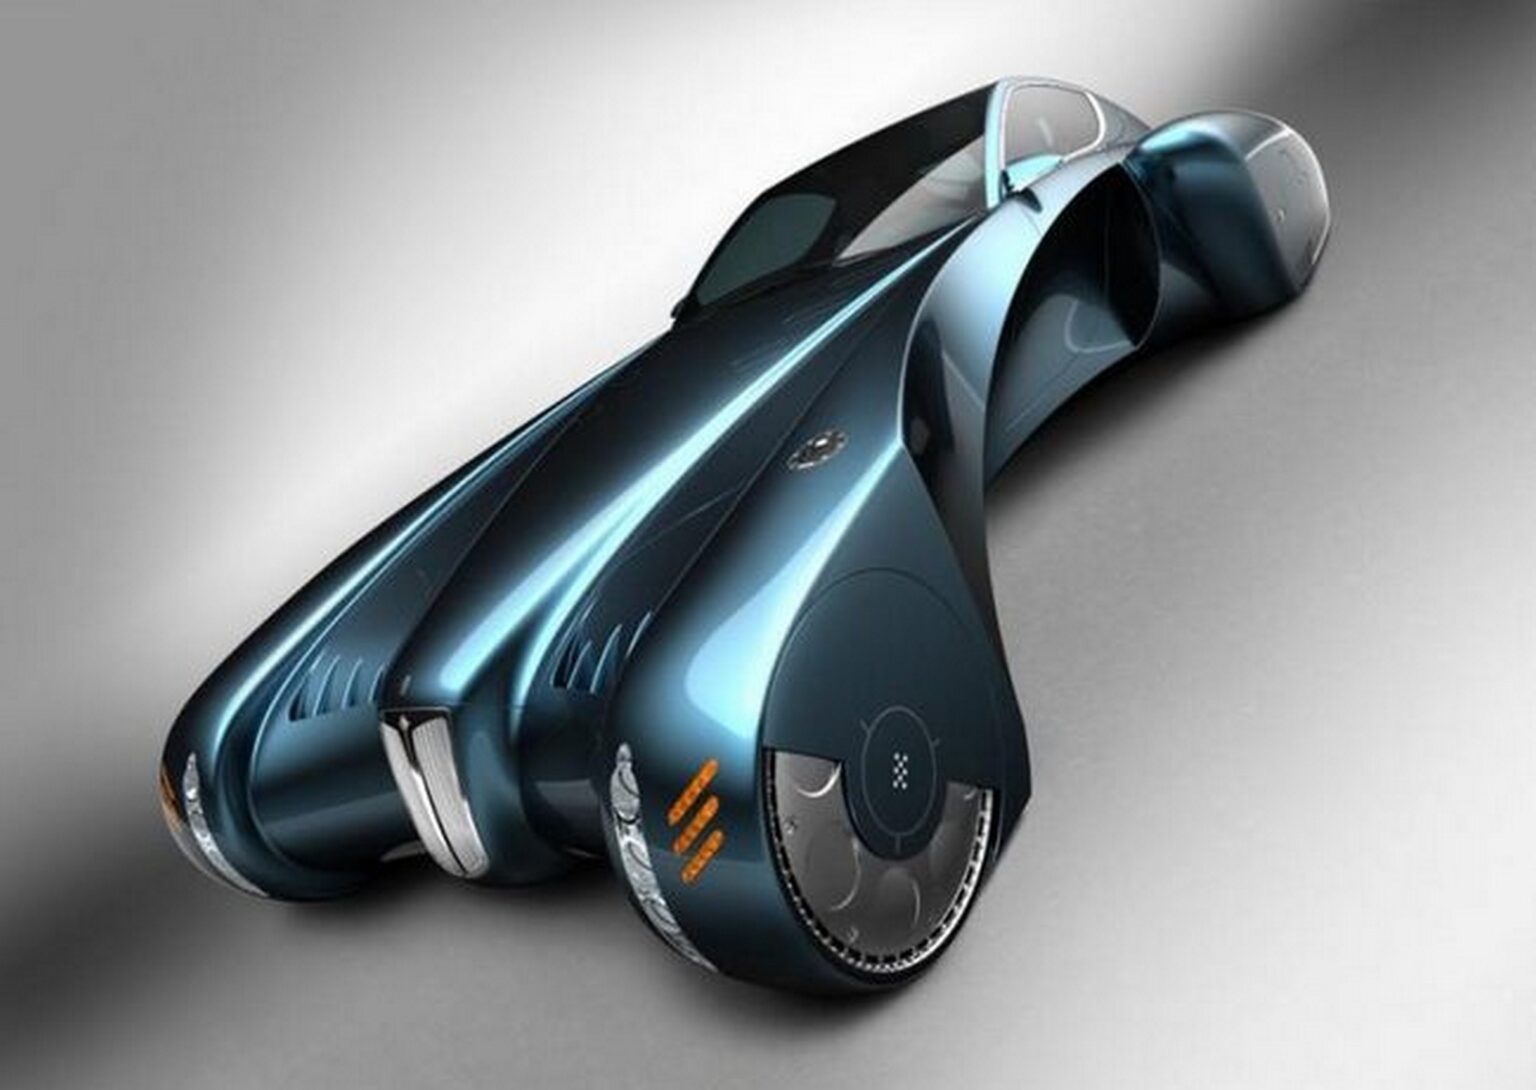 Will Smith hydrogen-powered car